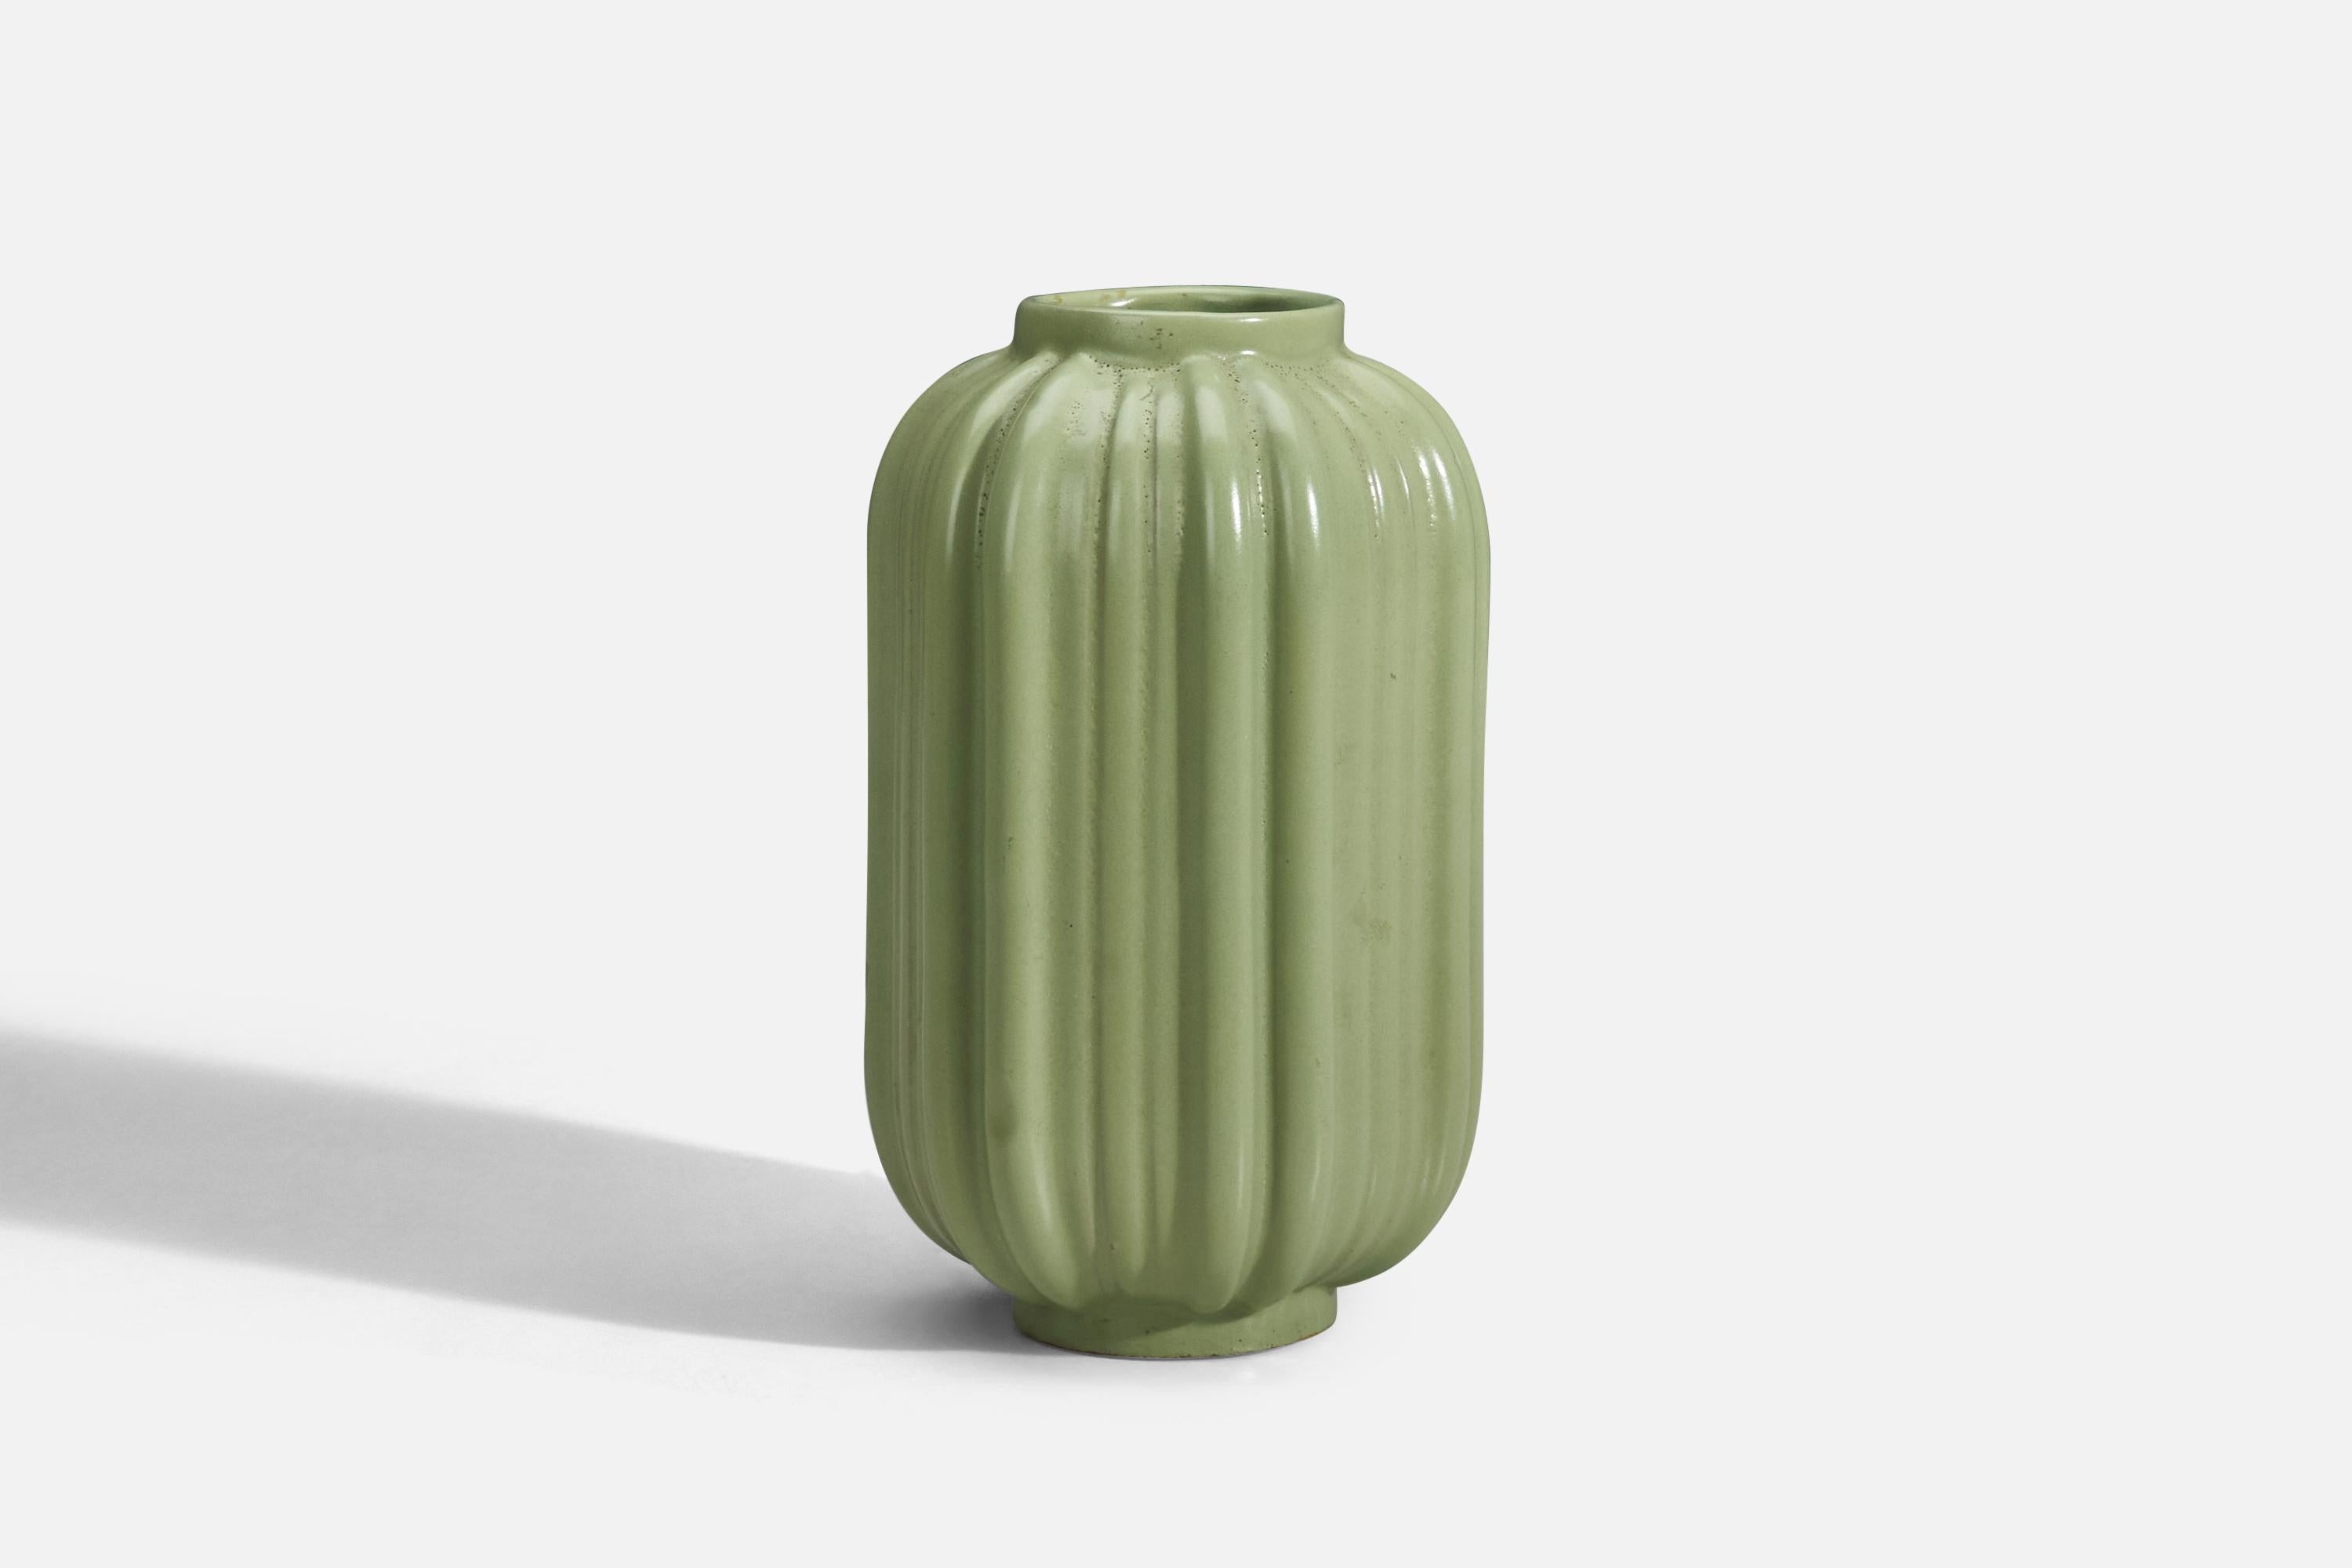 A green glazed earthenware vase designed and produced by Upsala-Ekeby, Sweden, 1940s.